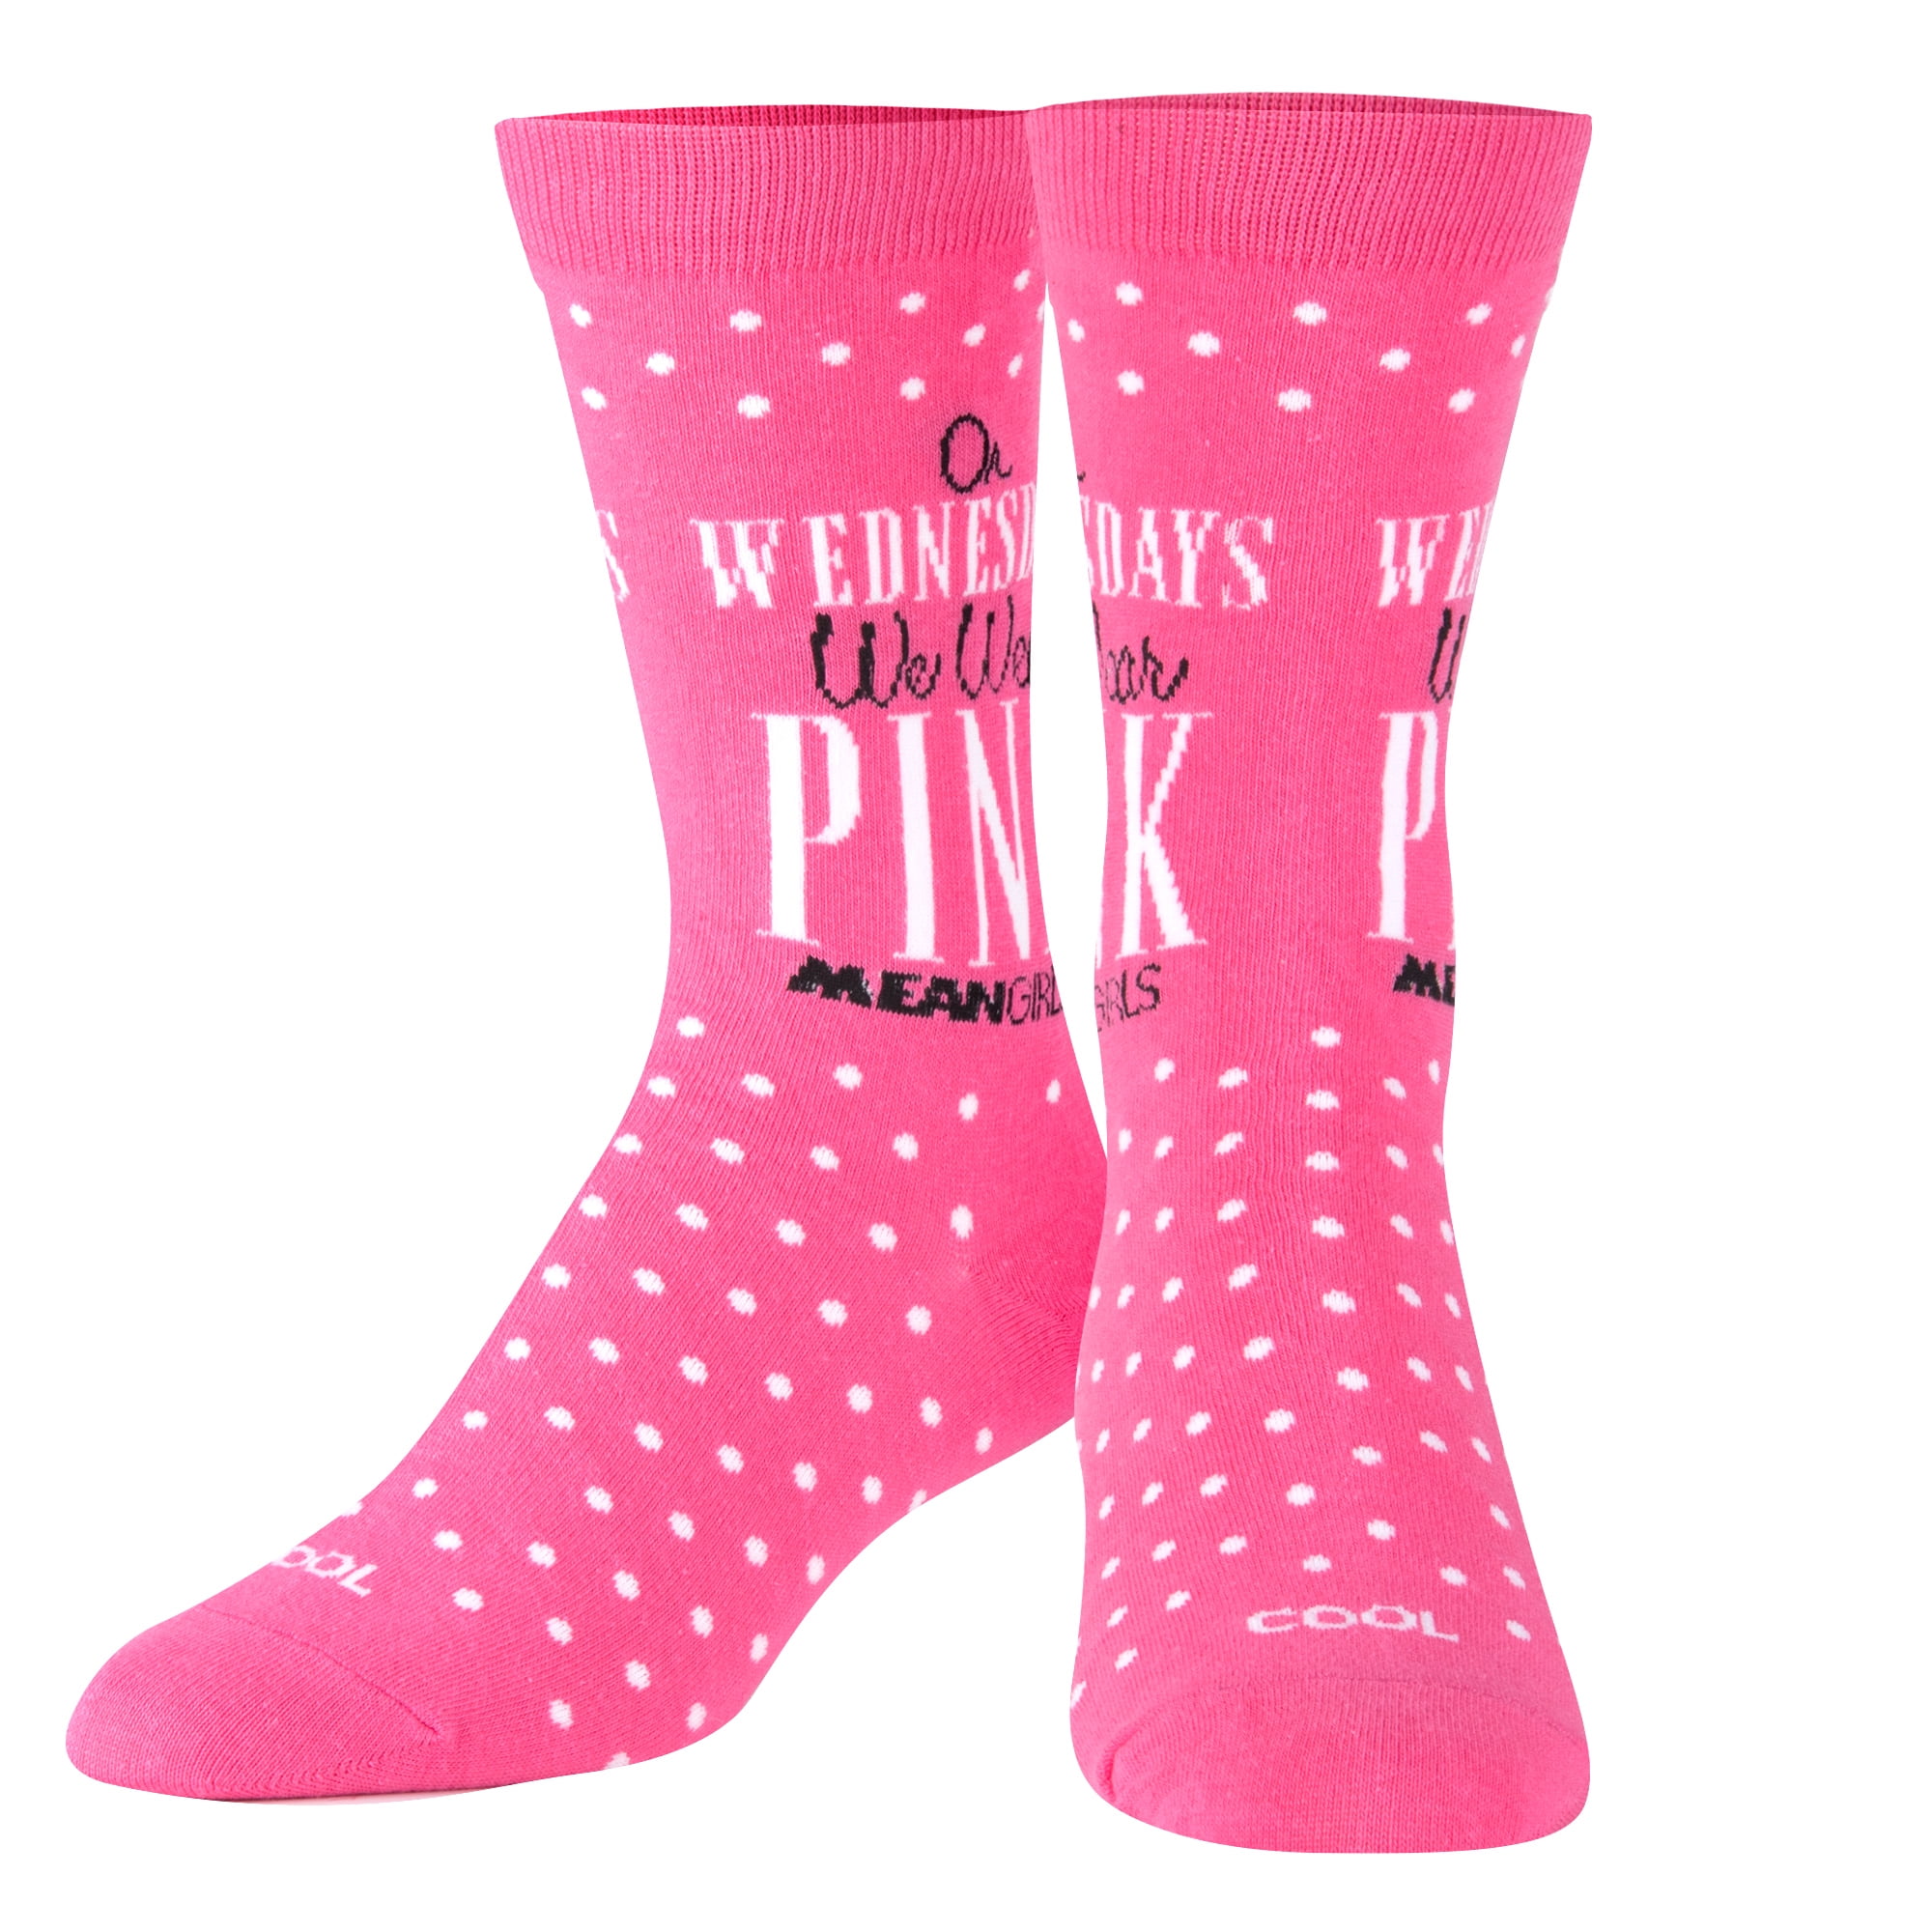 Planet Sox 5-Pk. Mean Girls No-Show Socks - Pink